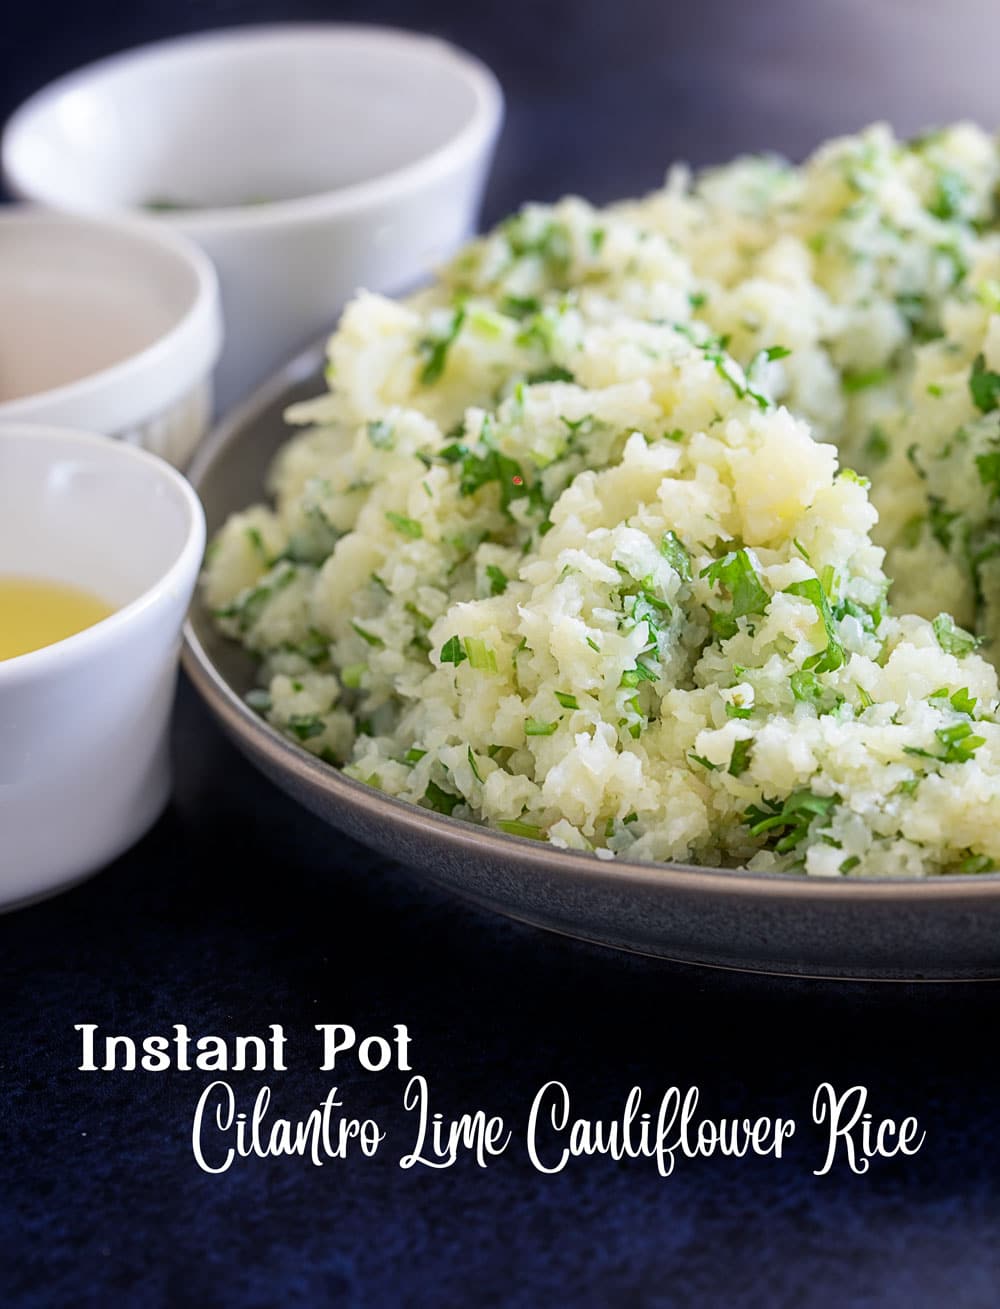 Instant Pot Cilantro Lime Cauliflower Rice